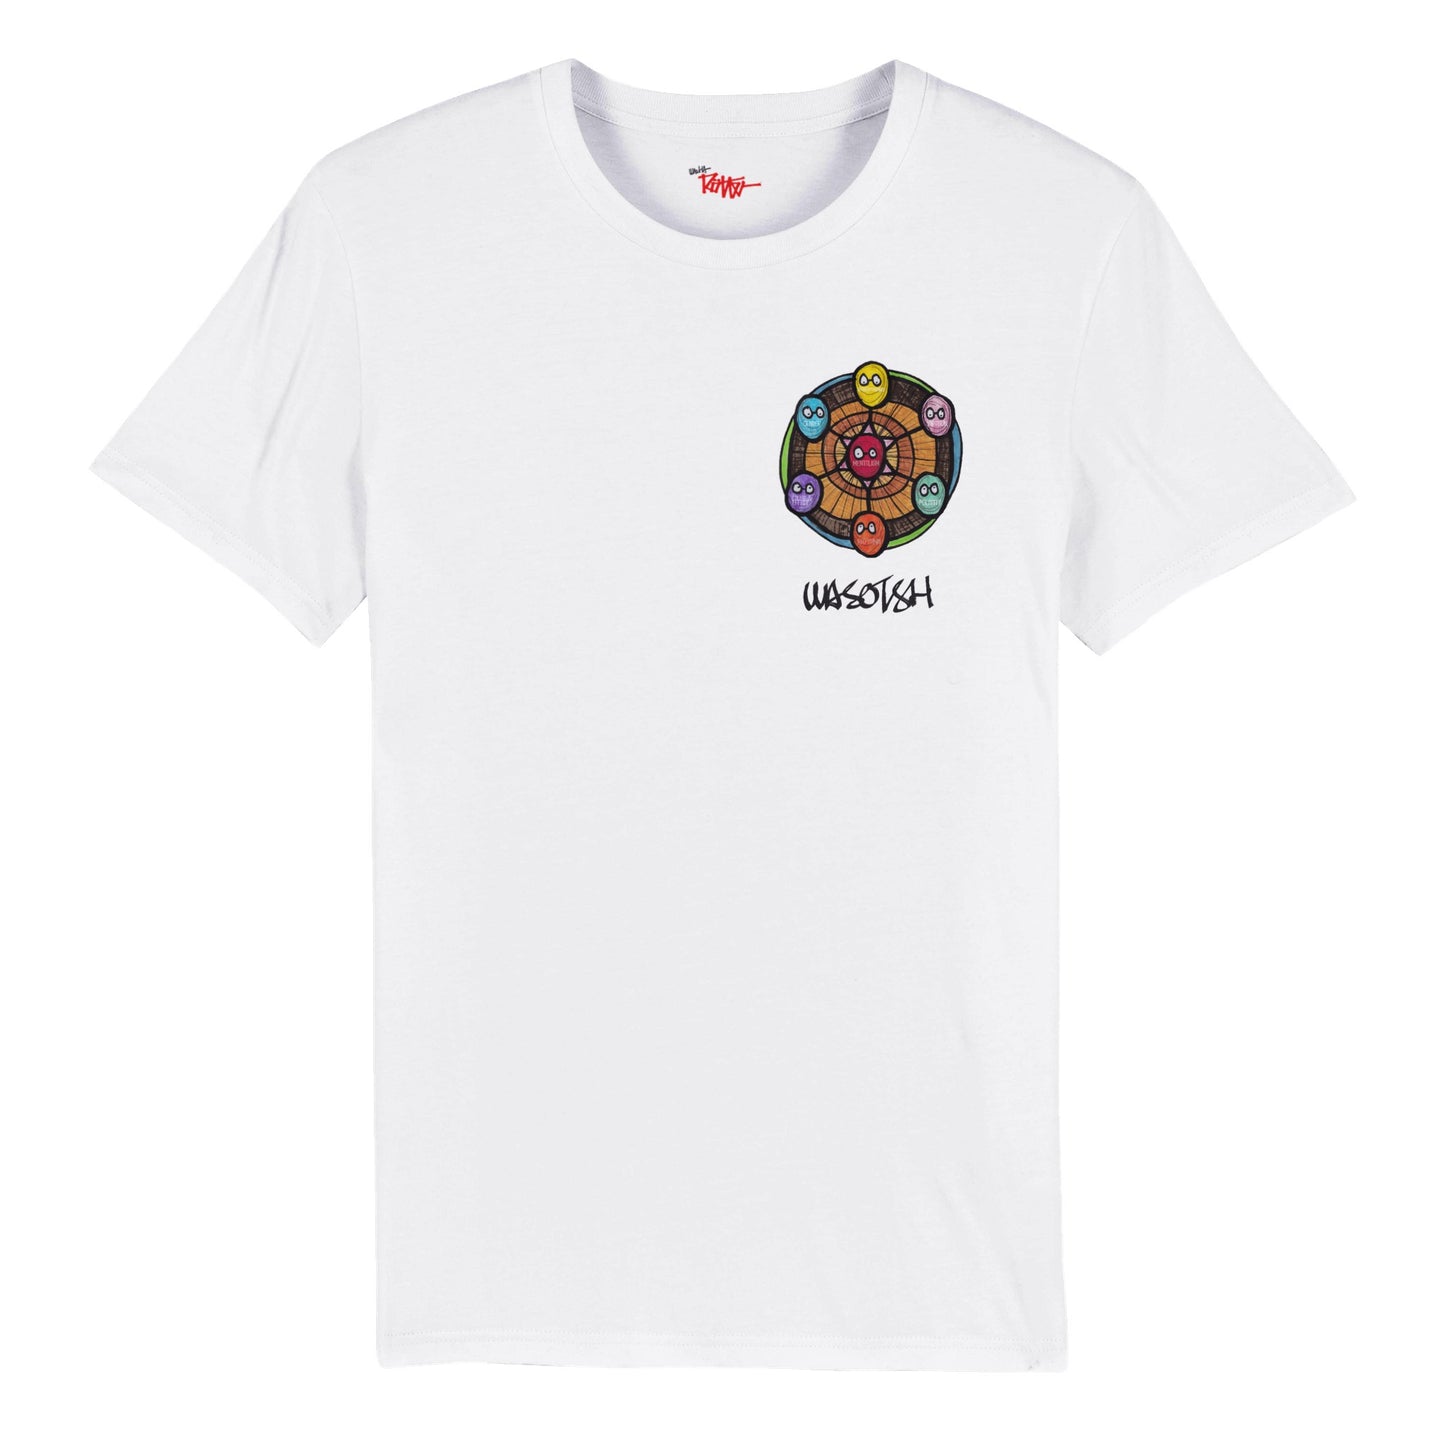 WASOTSH -THEM - Organic Unisex Crewneck T-shirt